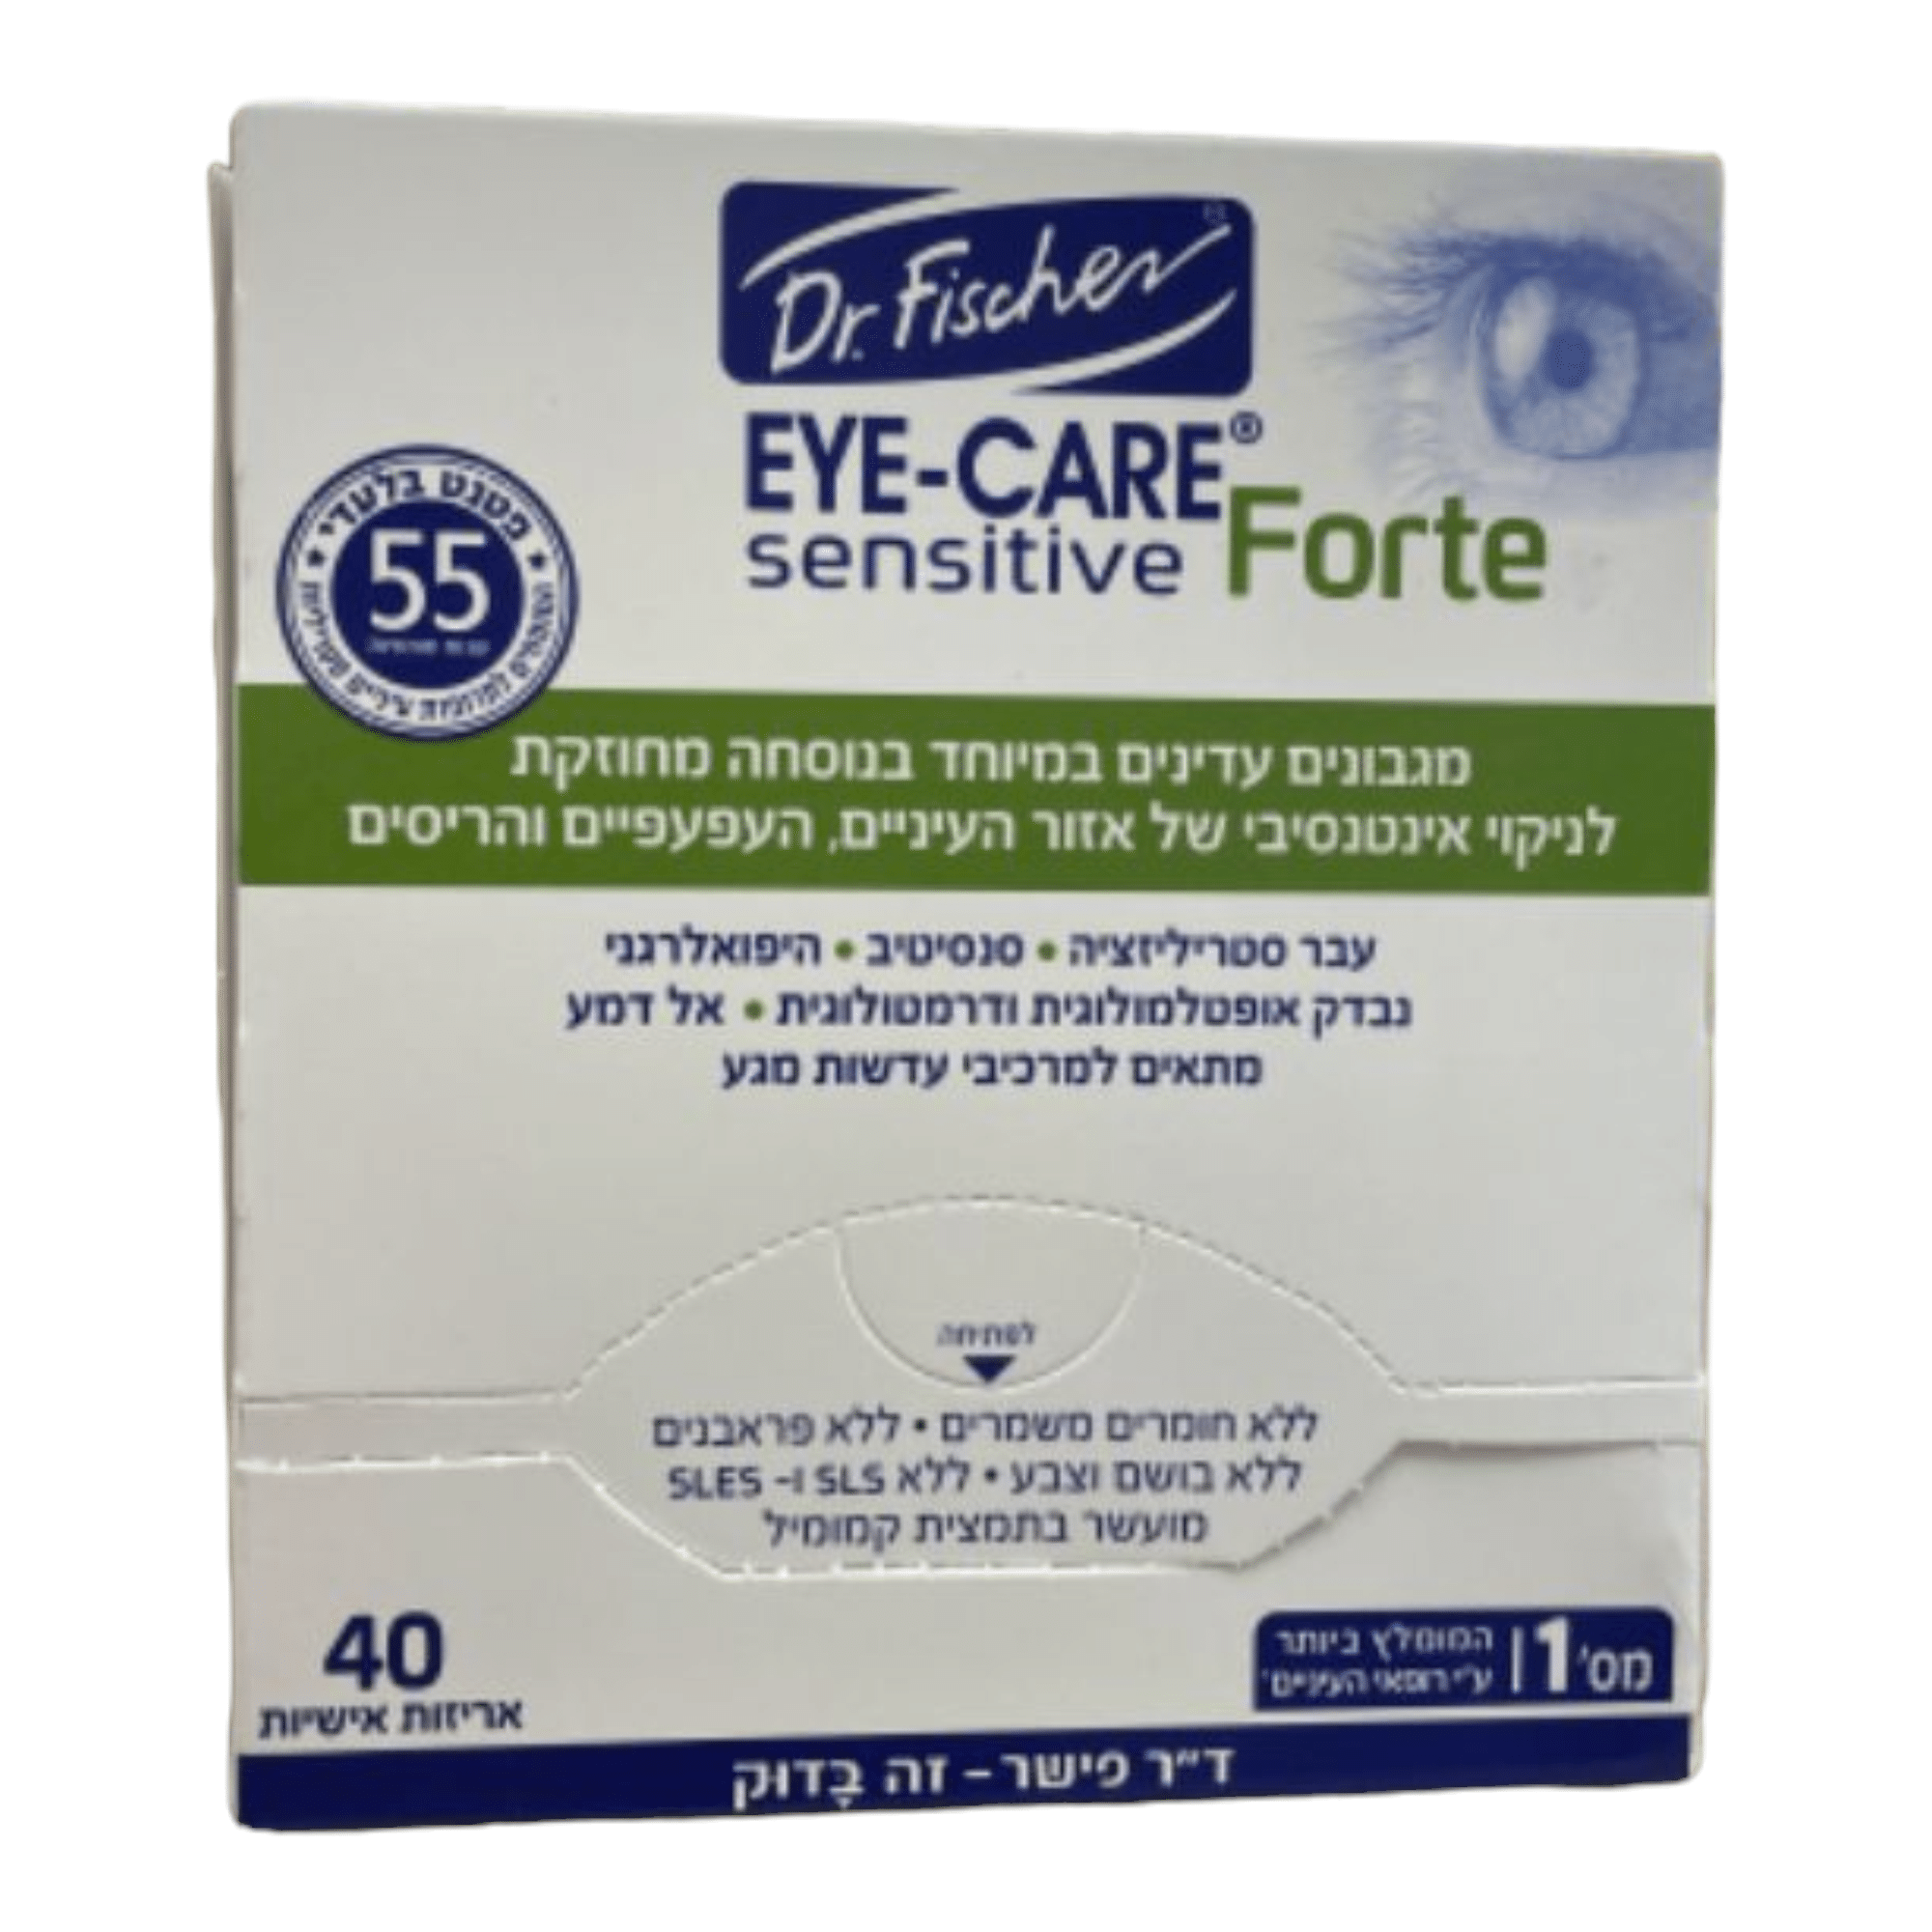 Dr Fischer EYE-CARE® sensitive Forte